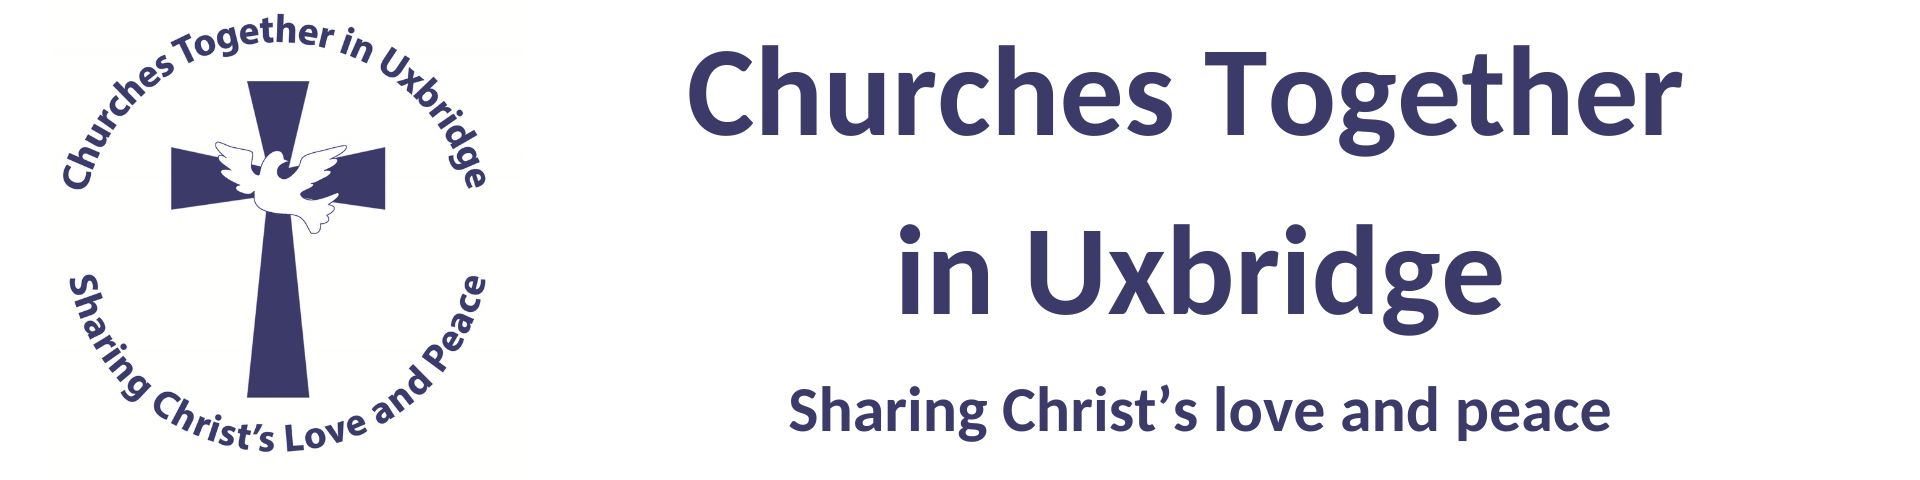 Churches Together in Uxbridge